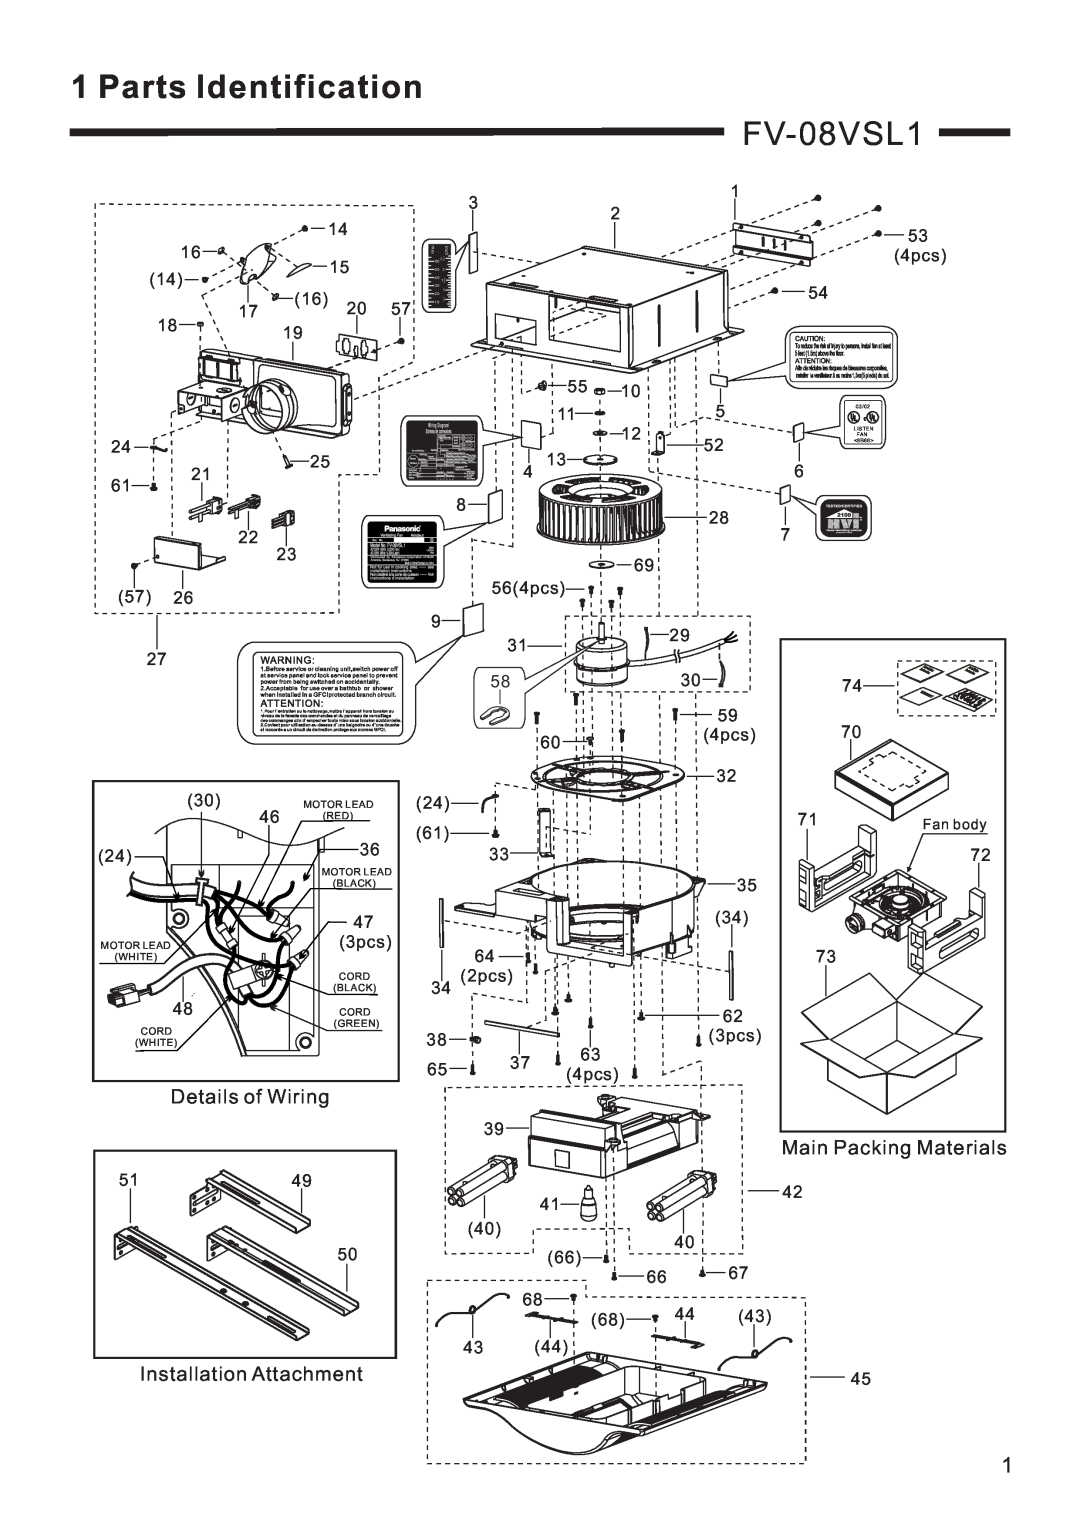 Panasonic FV-08VSL1 service manual Parts Identification, Main Packing Materials, Installation Attachment 